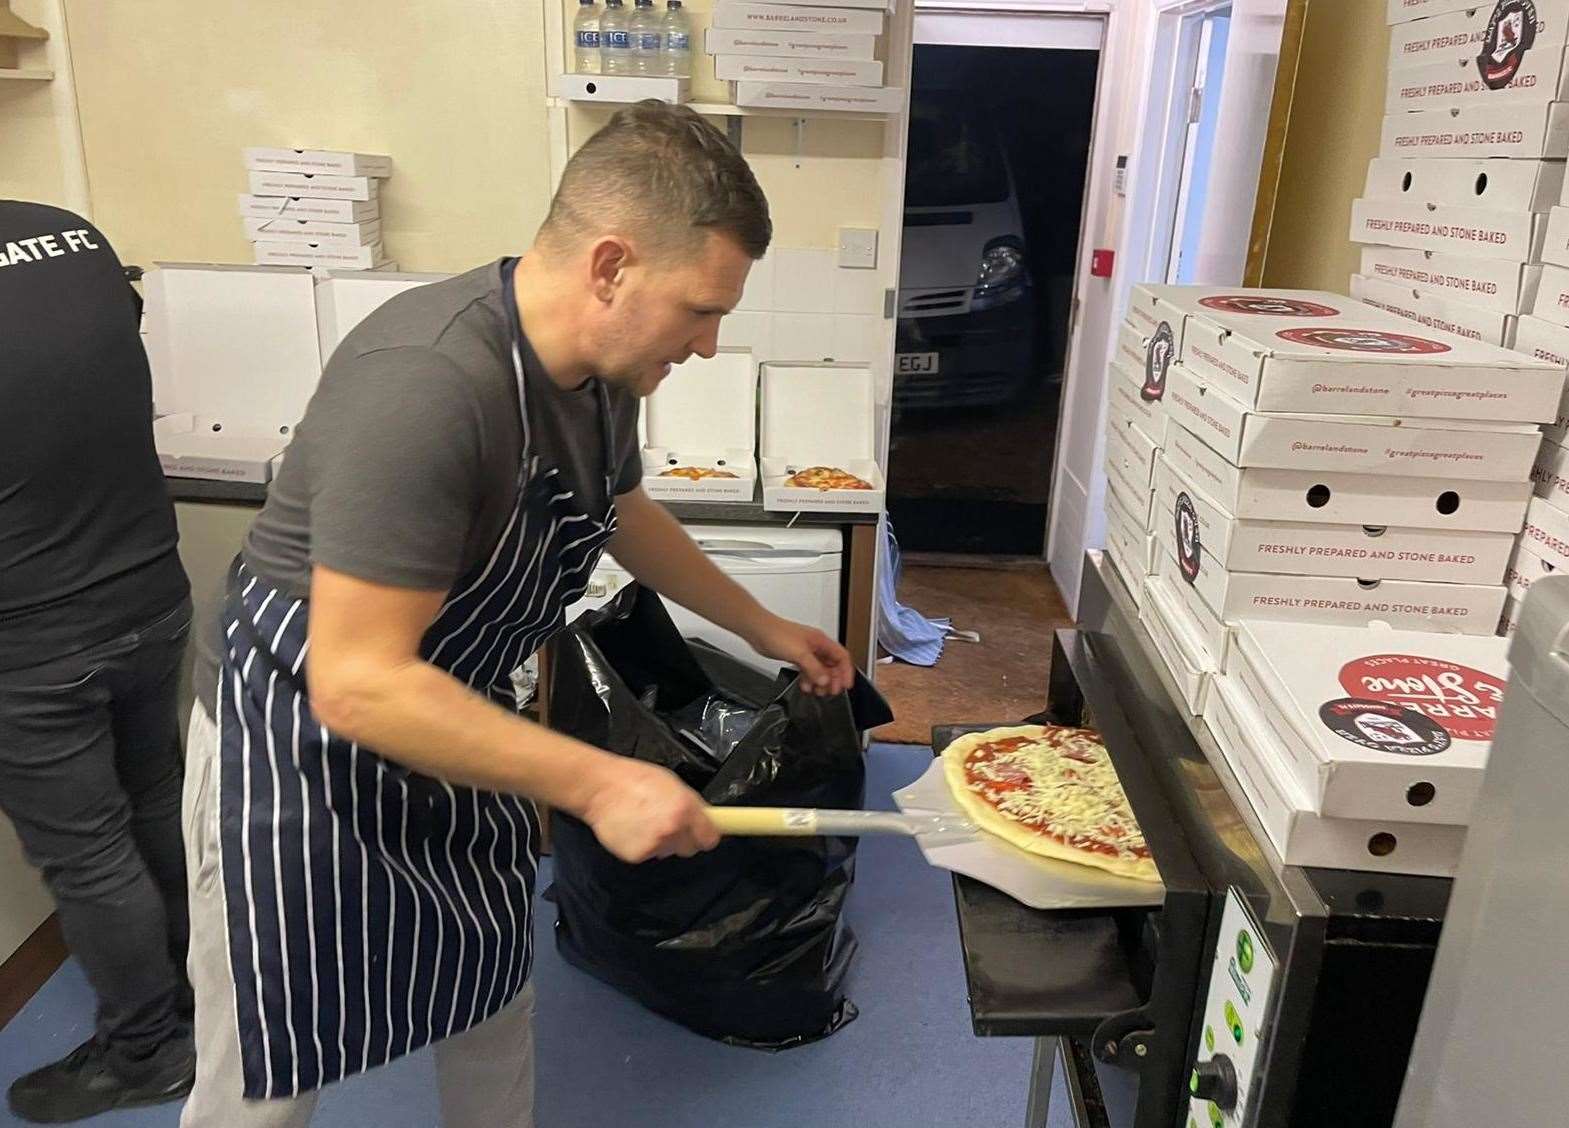 Preparing the mammoth pizza order at Ramsgate Football Club